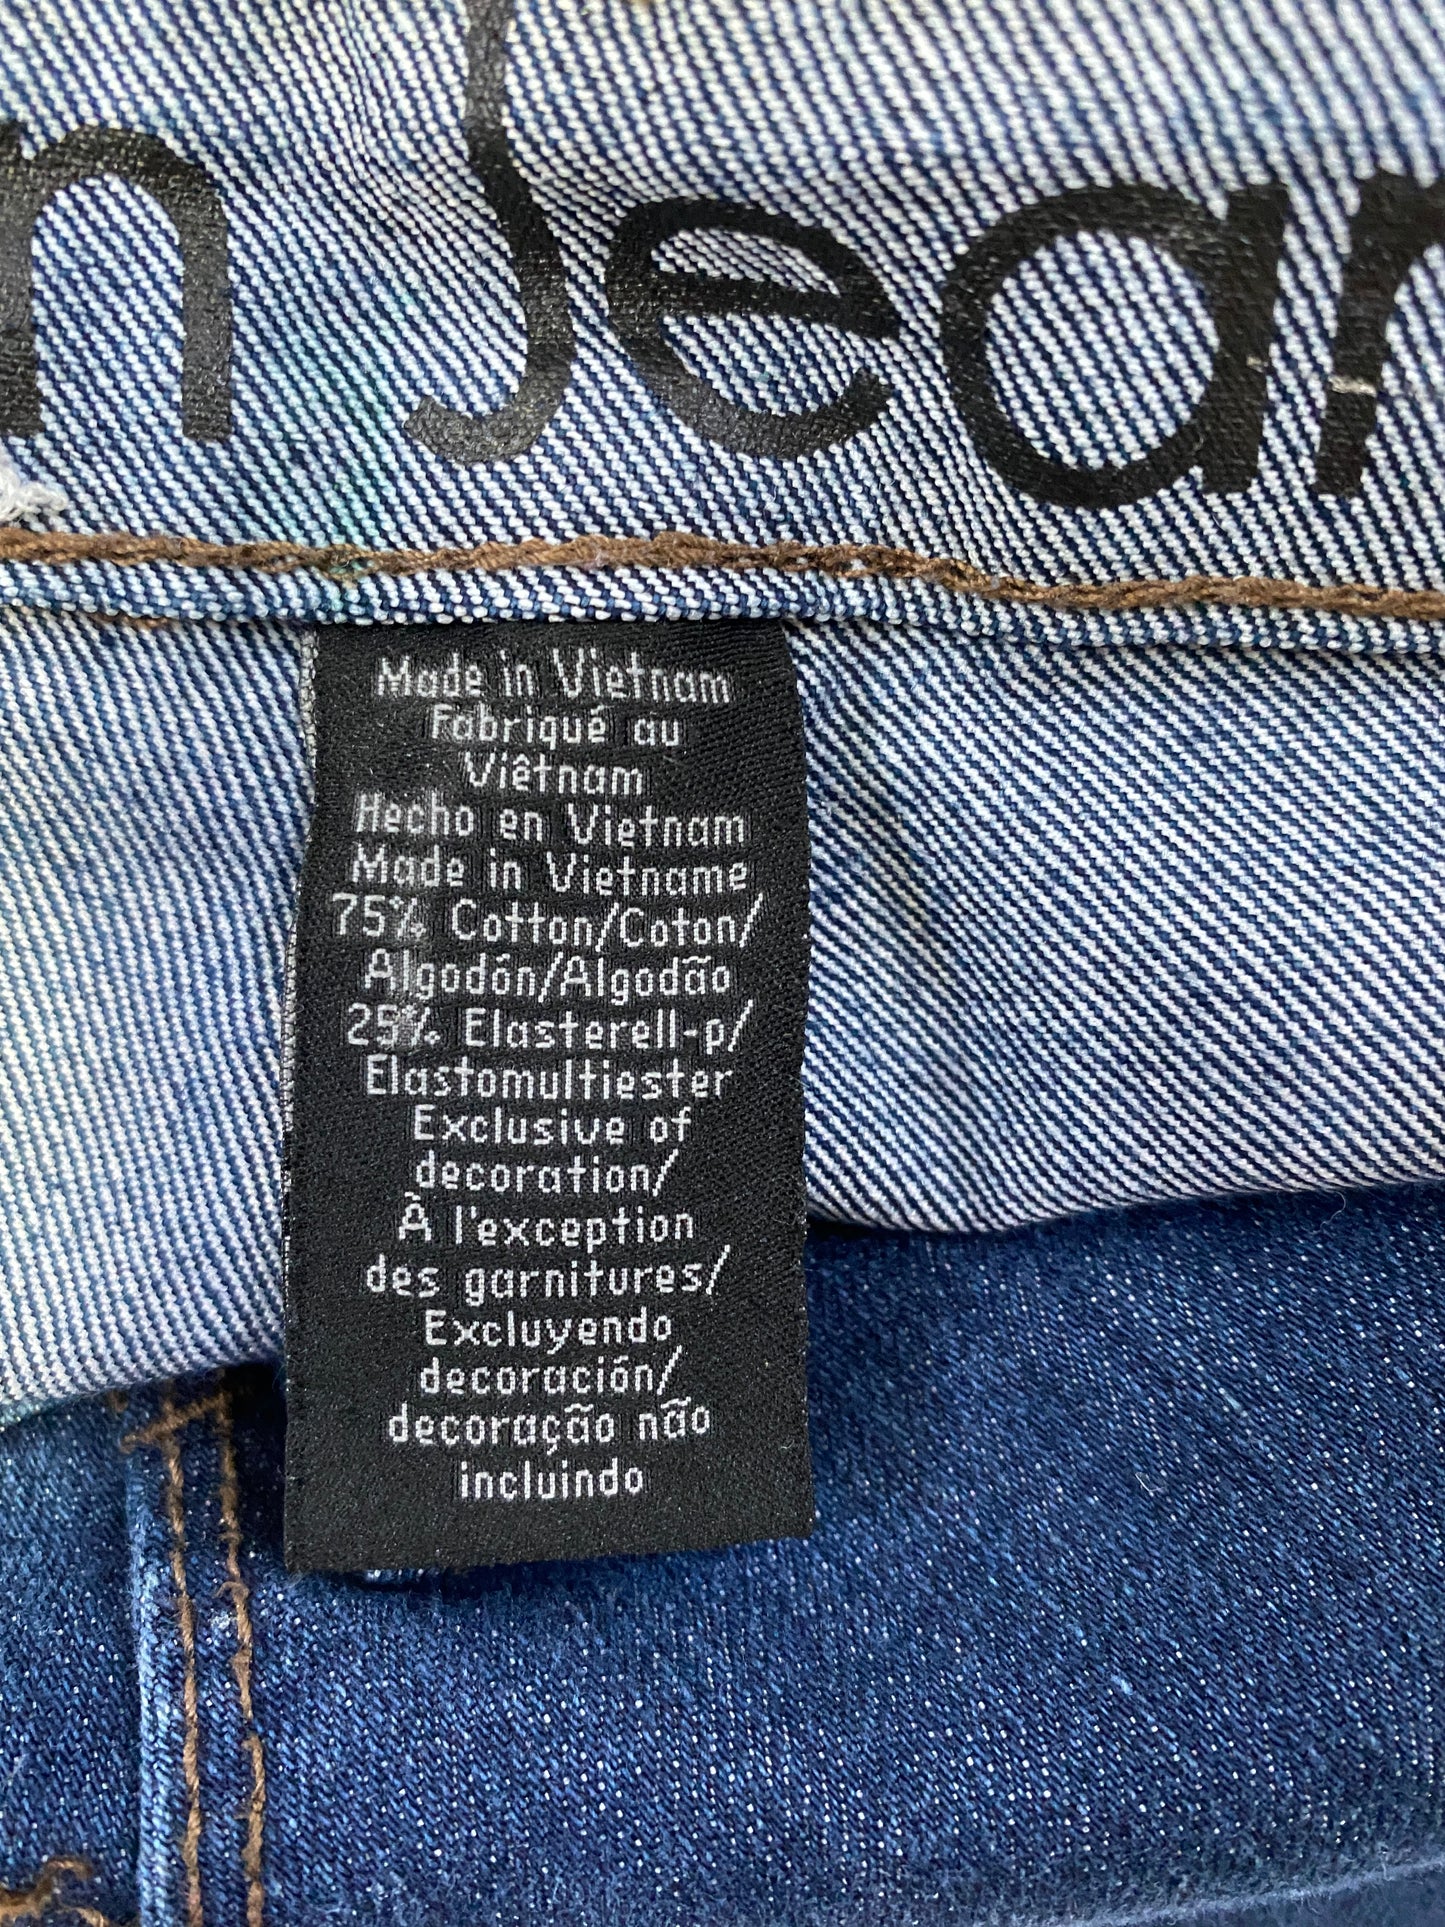 Calvin Klein Jeans Blue Denim Size 10  SKU 000376-5